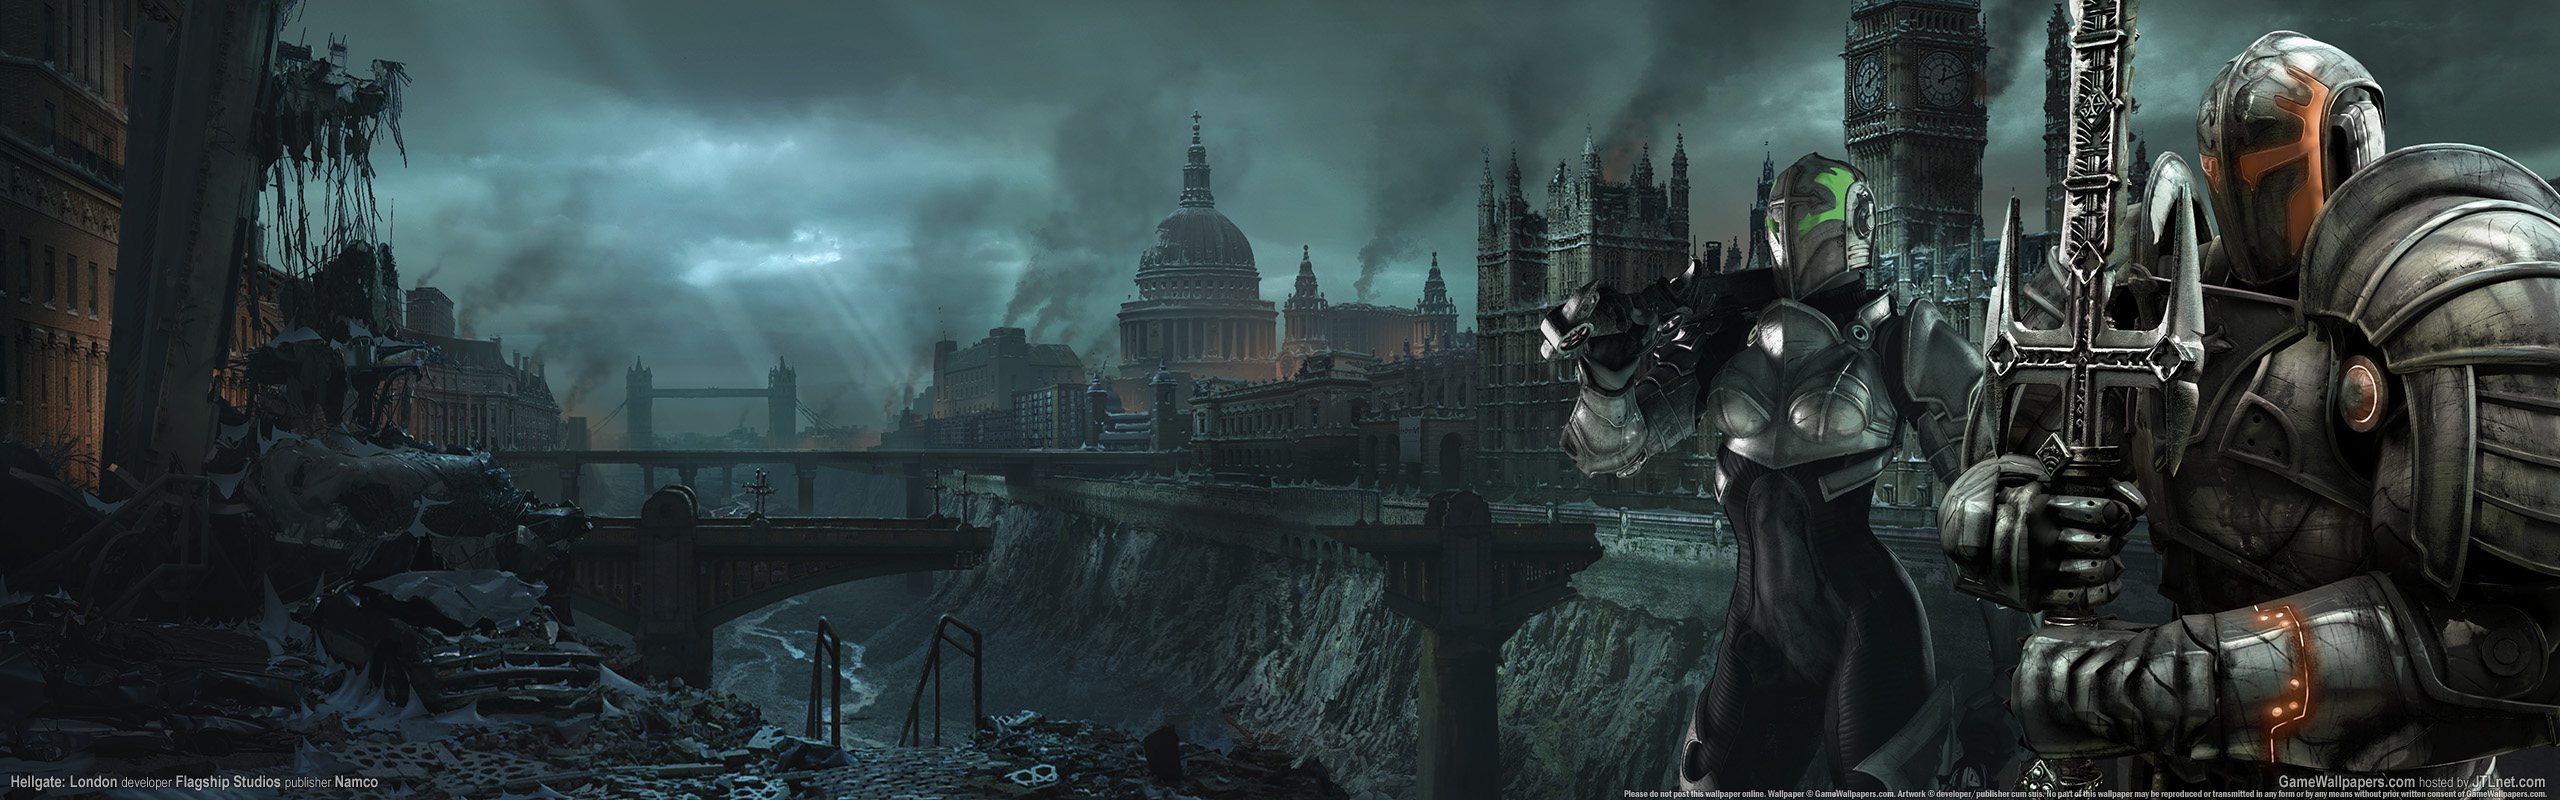 video game, hellgate: london wallpaper for mobile